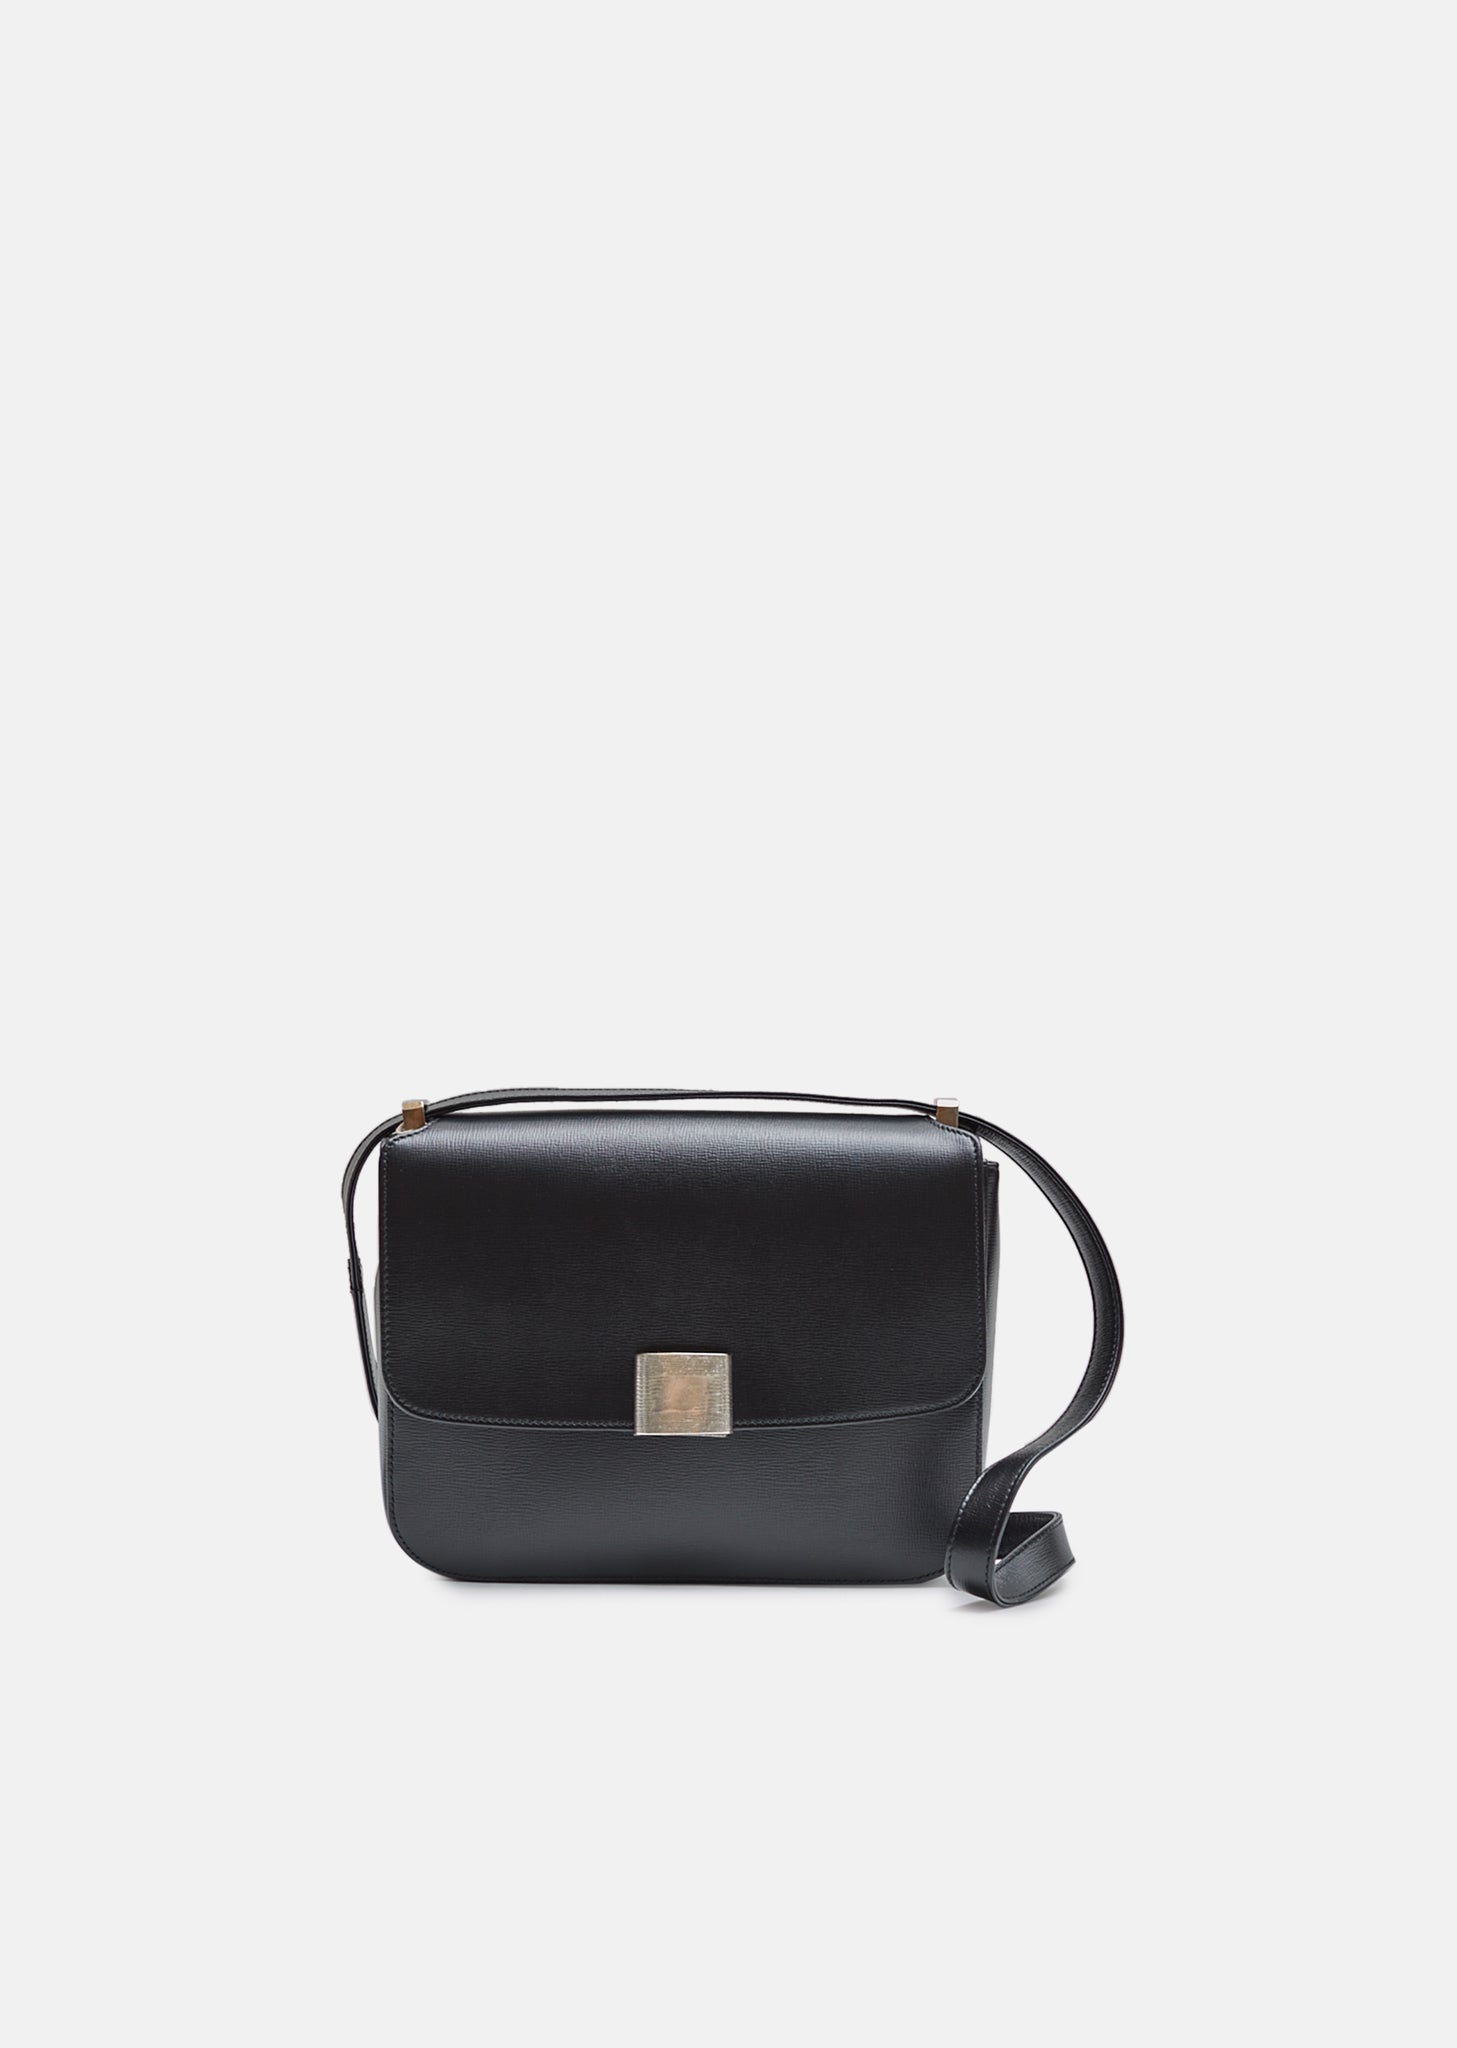 Valentina Handbags On Sale Up To 90% Off Retail | thredUP